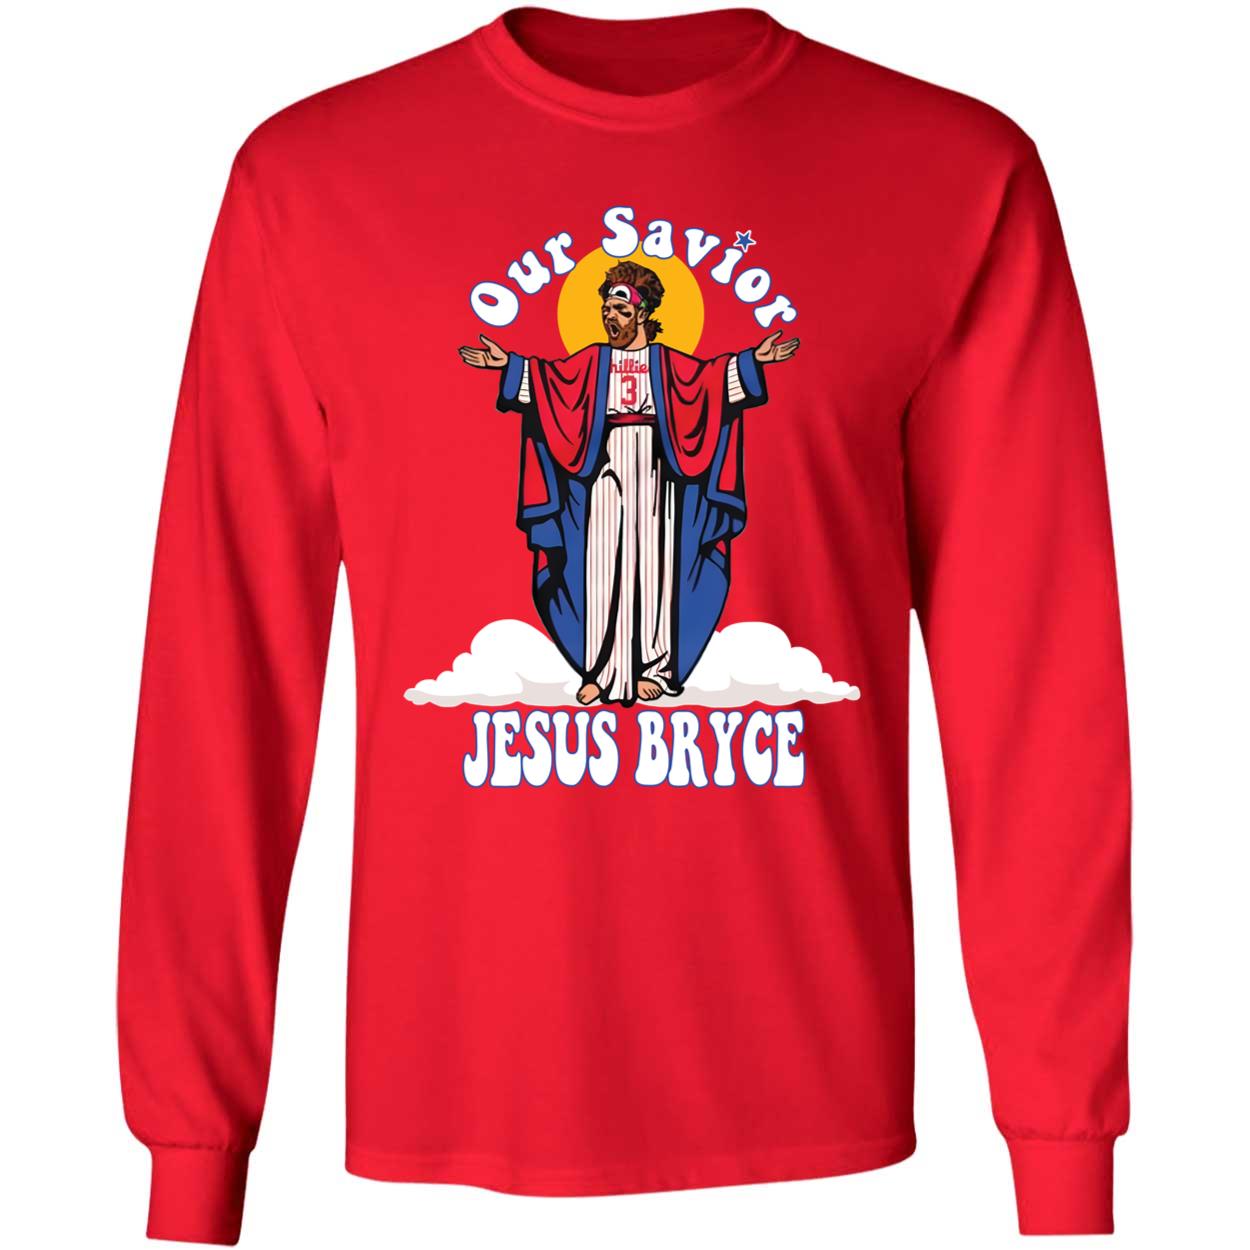 Bryce Harper our savior Jesus Bryce shirt, hoodie, sweater, long